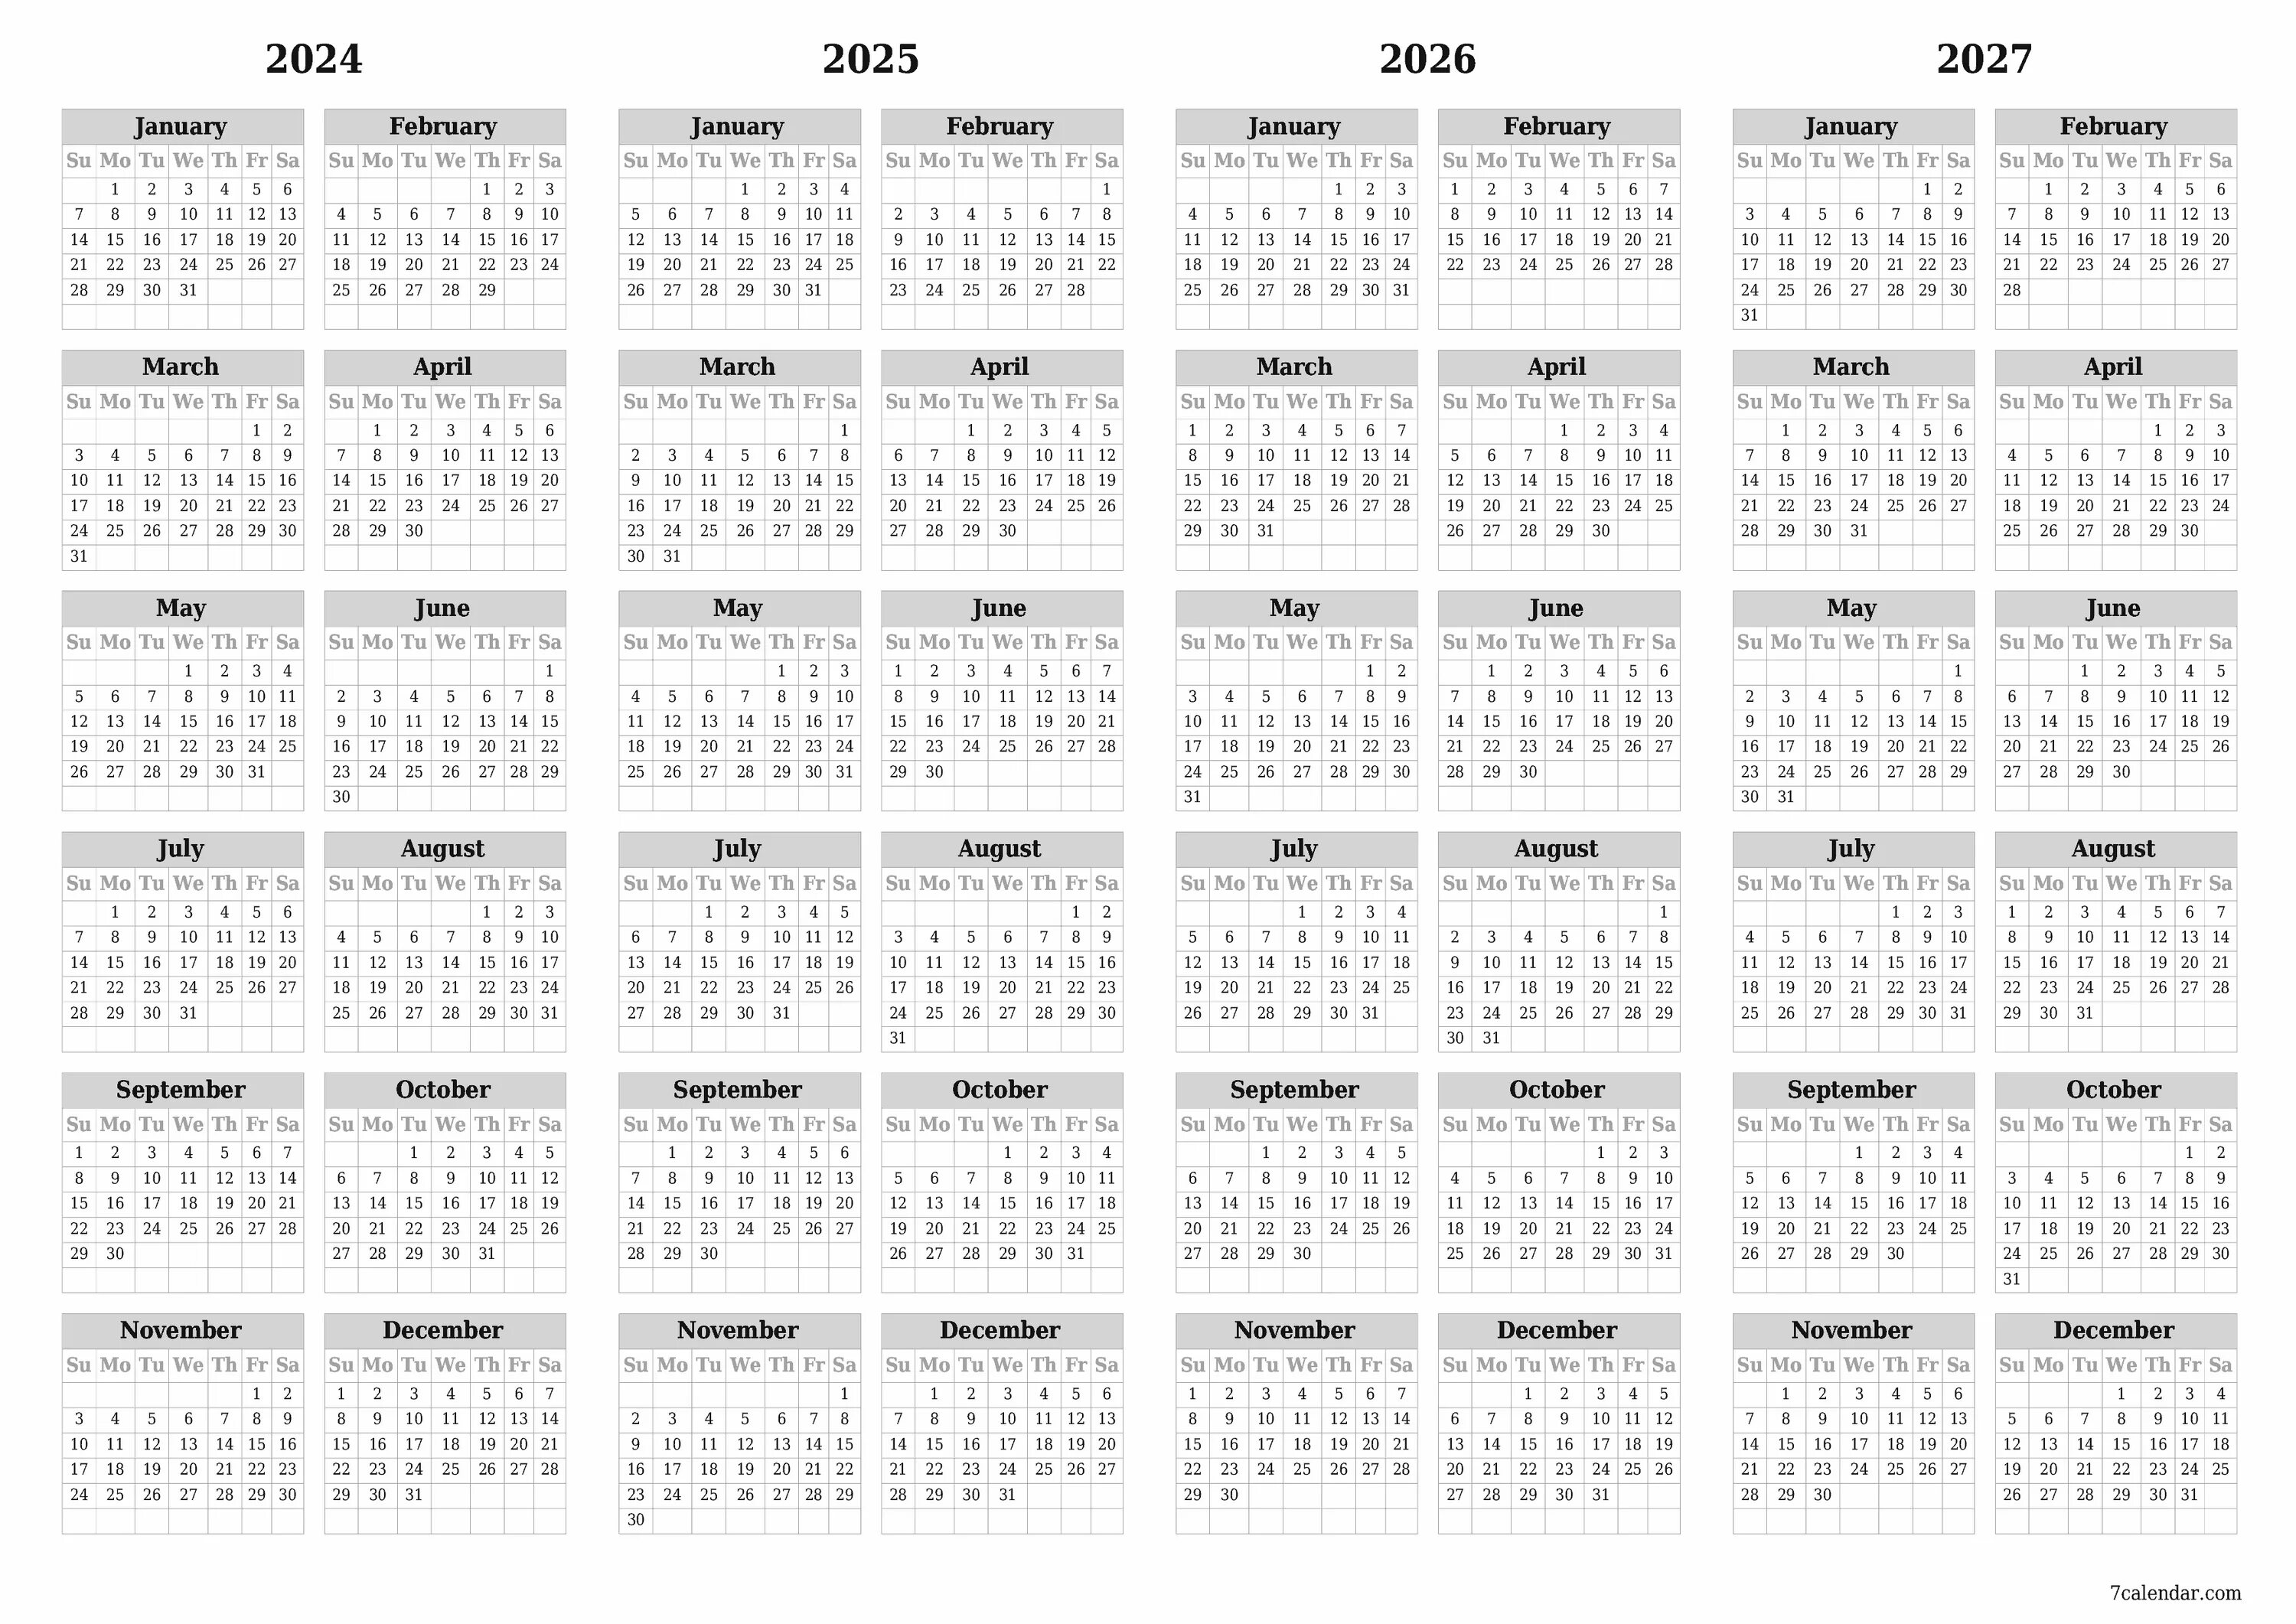 7calendar com. Календарь 2022 2023 2024 2025 года. Календарь 2024 2025 2026 2027 2028. 2022 2023 2024 2025 Календарная сетка. Календарь 2026,2027, 2028.